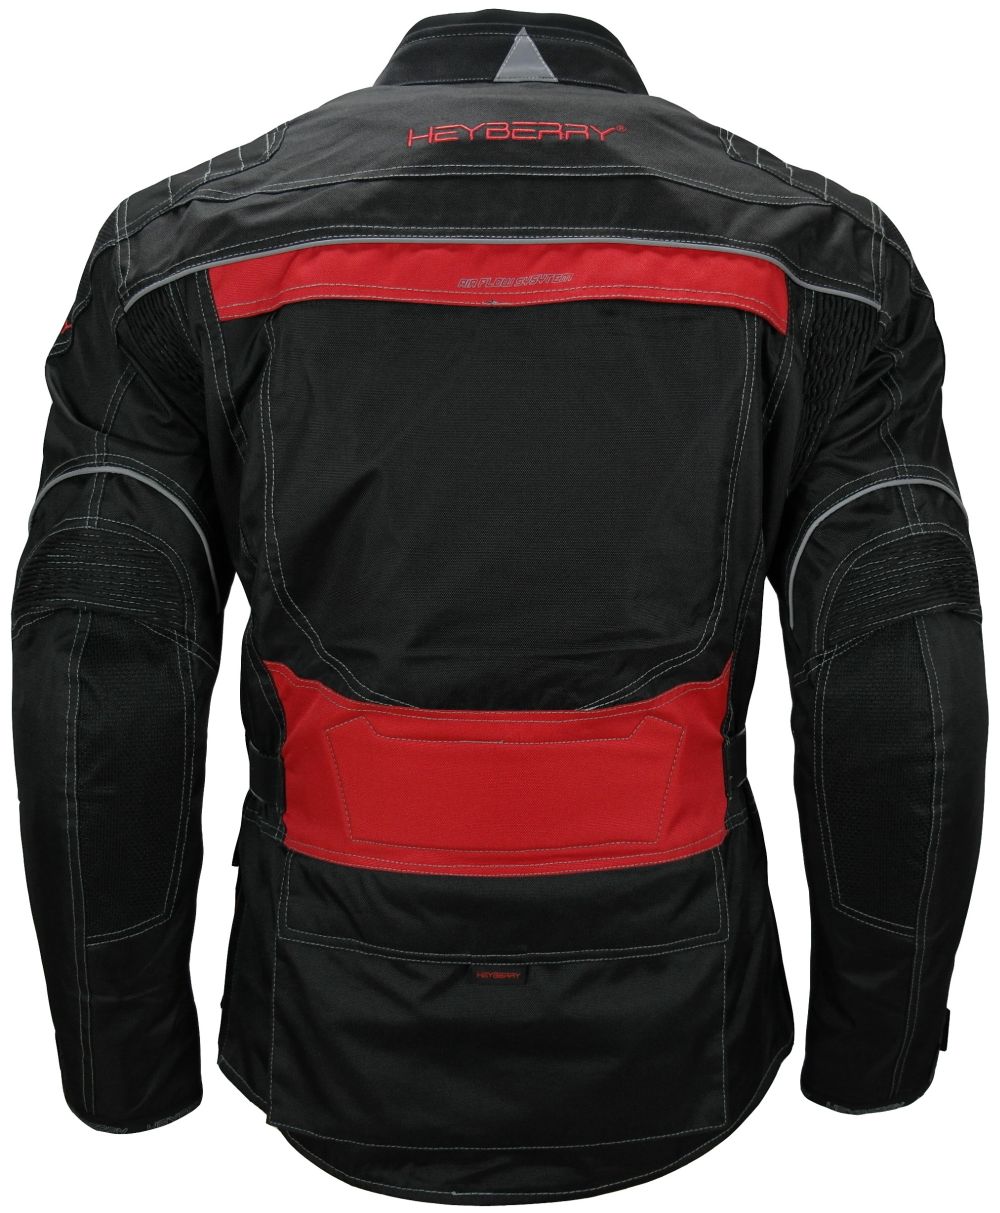 Heyberry Touren Motorrad Jacke Motorradjacke Textil schwarz rot  Gr. M - 3XL